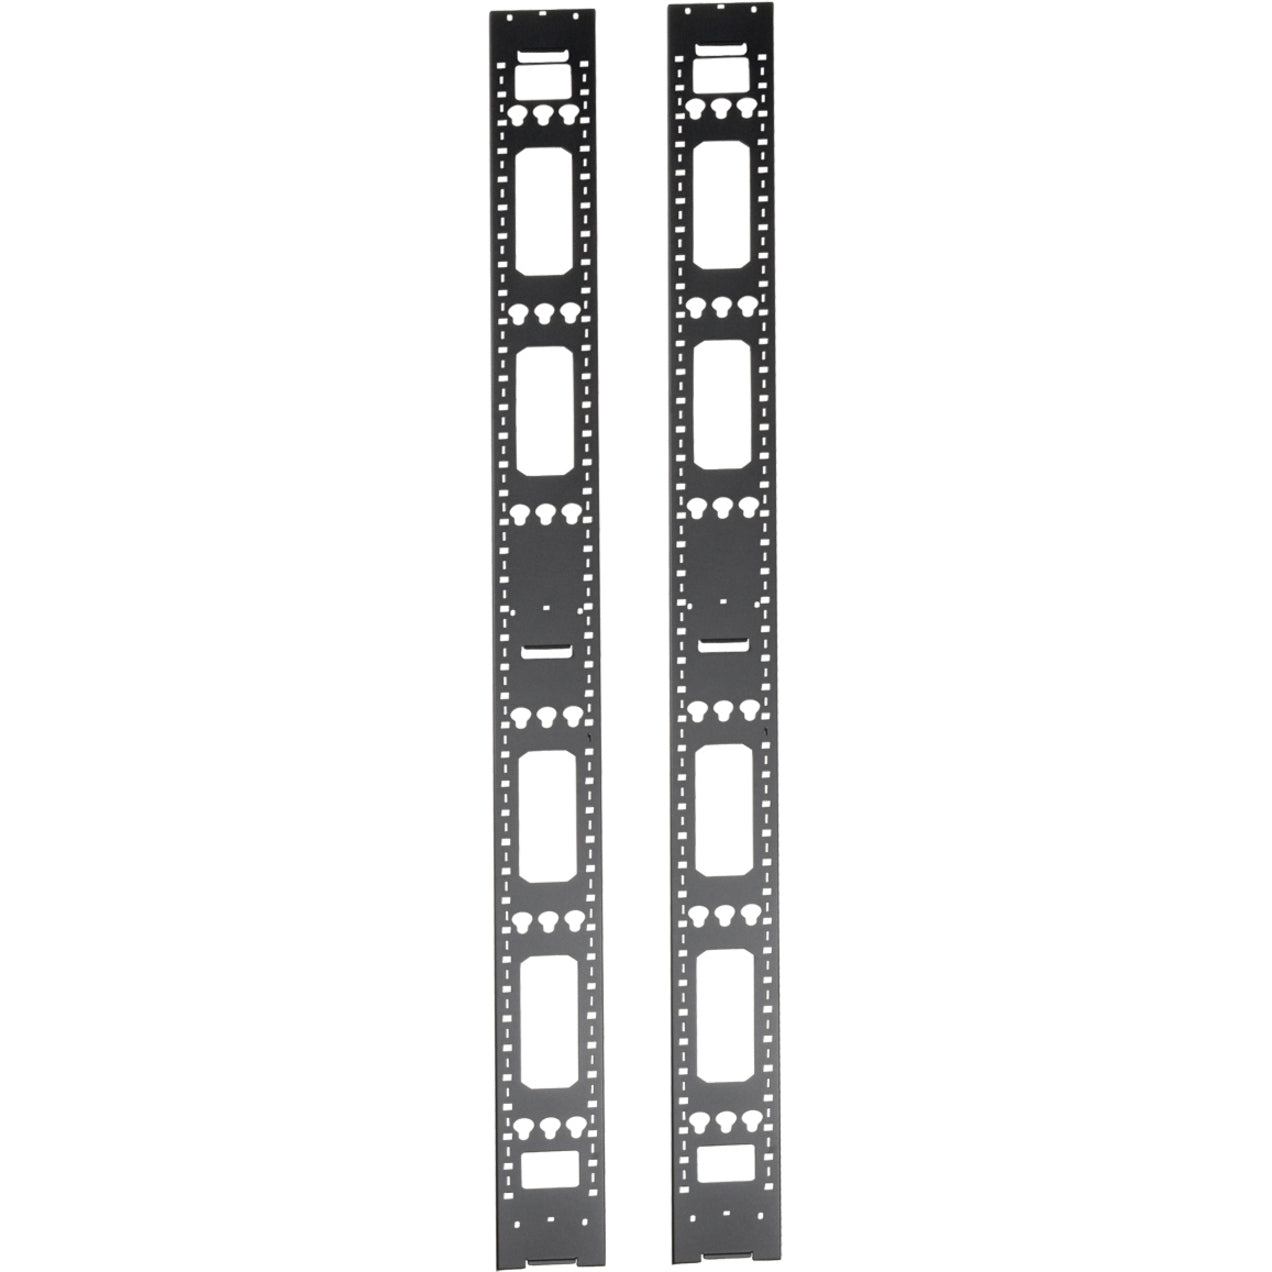 Tripp Lite SRVRTBAR Vertical Cable Management Bars 42U Rack Height  トリップ ライト SRVRTBAR 縦型ケーブル管理バー、42U ラック高さ